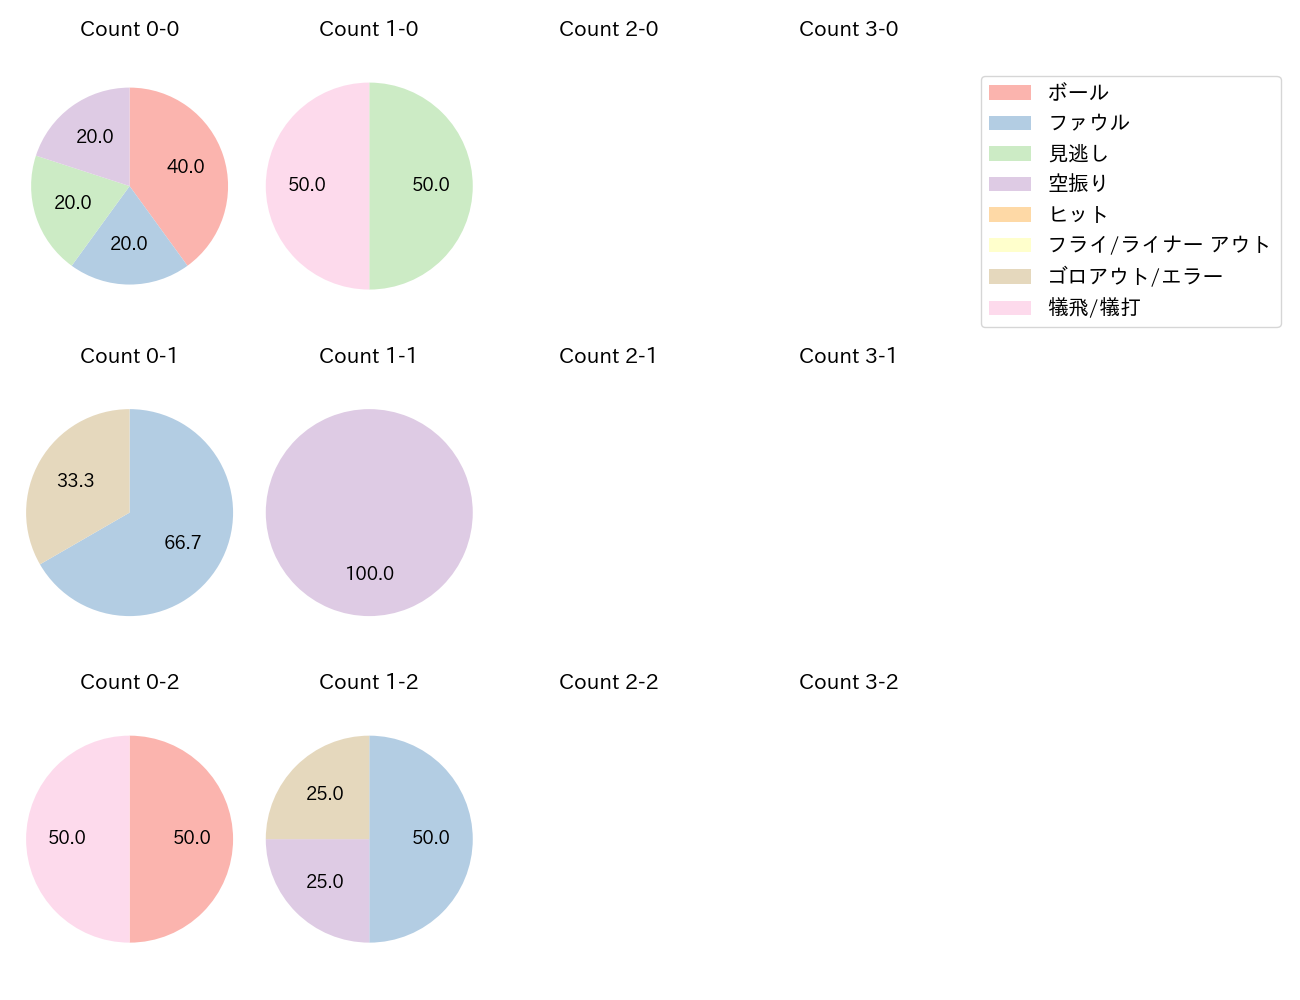 高橋 奎二の球数分布(2023年8月)